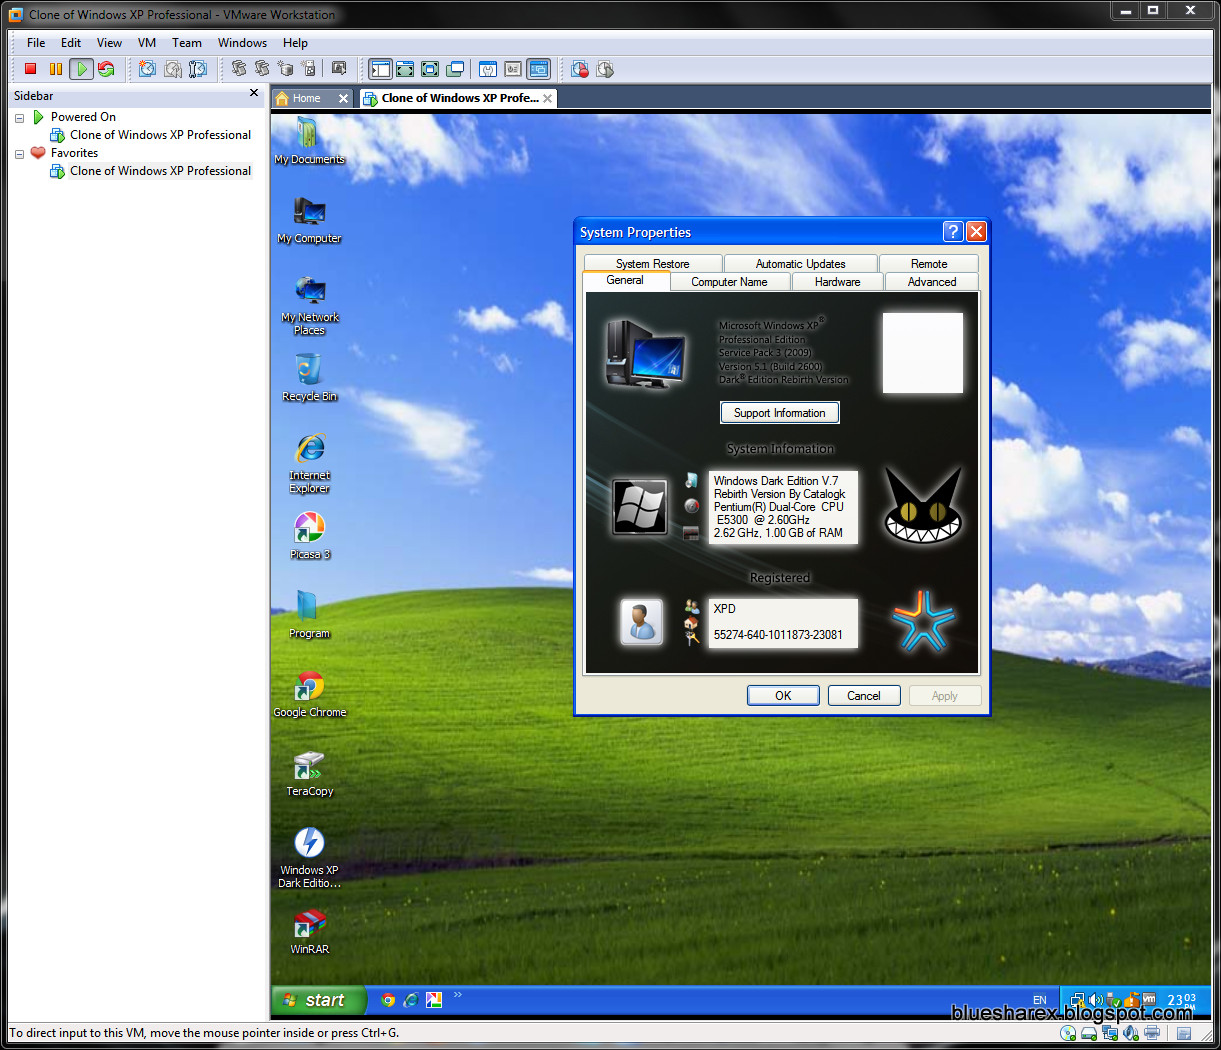 download vmware player for windows 7 64 bit